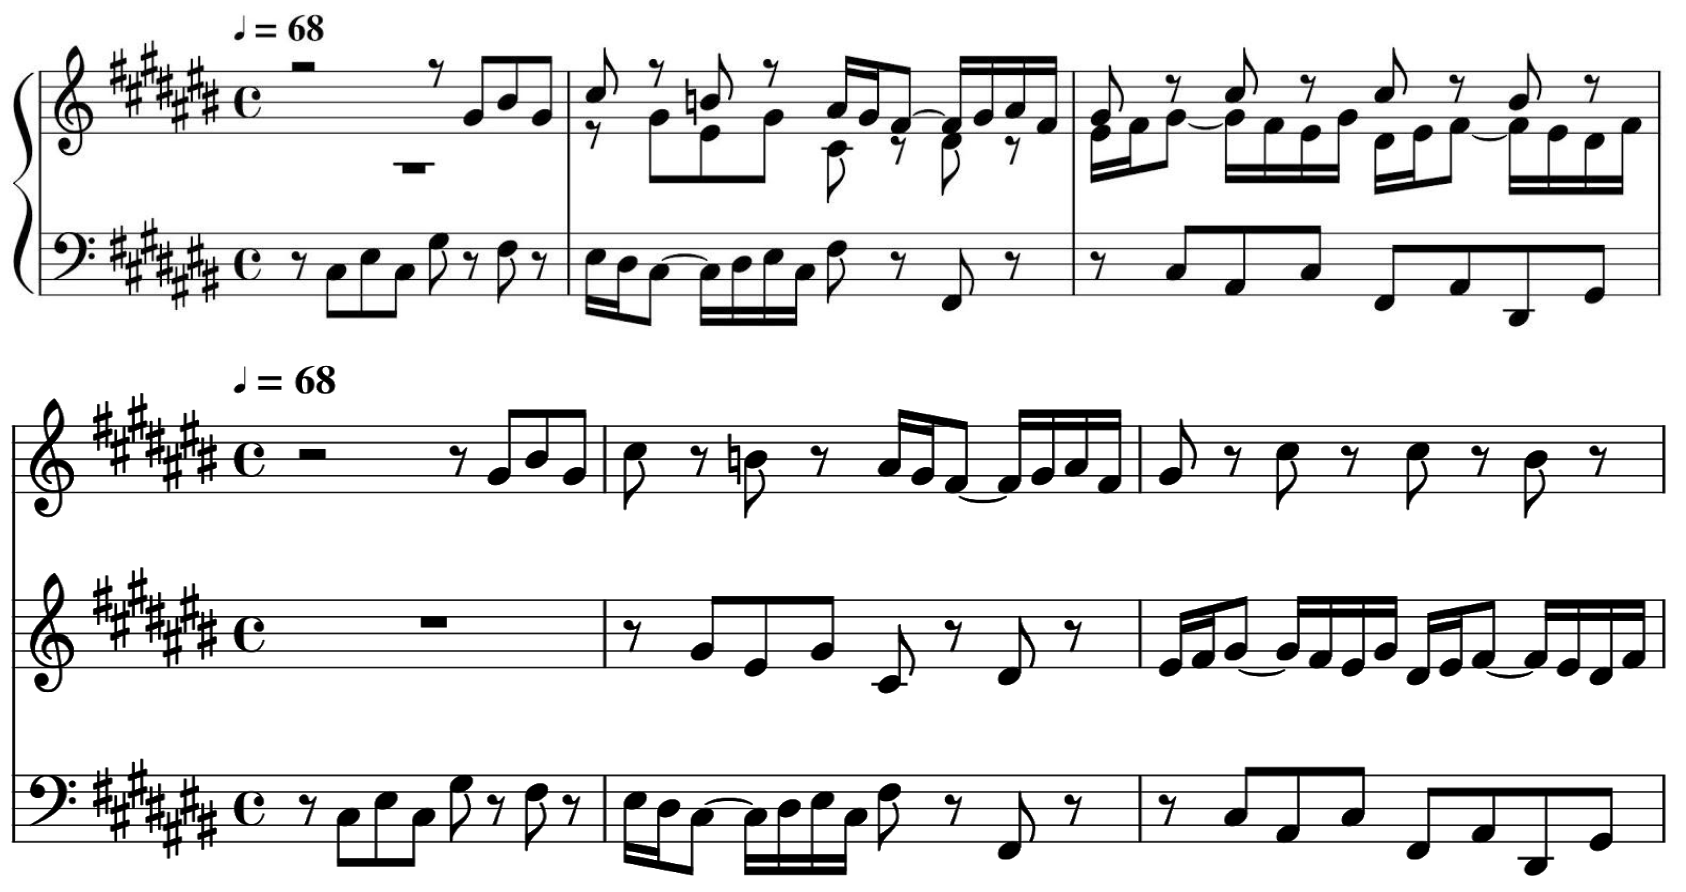 Lines of sheet music. More description below.